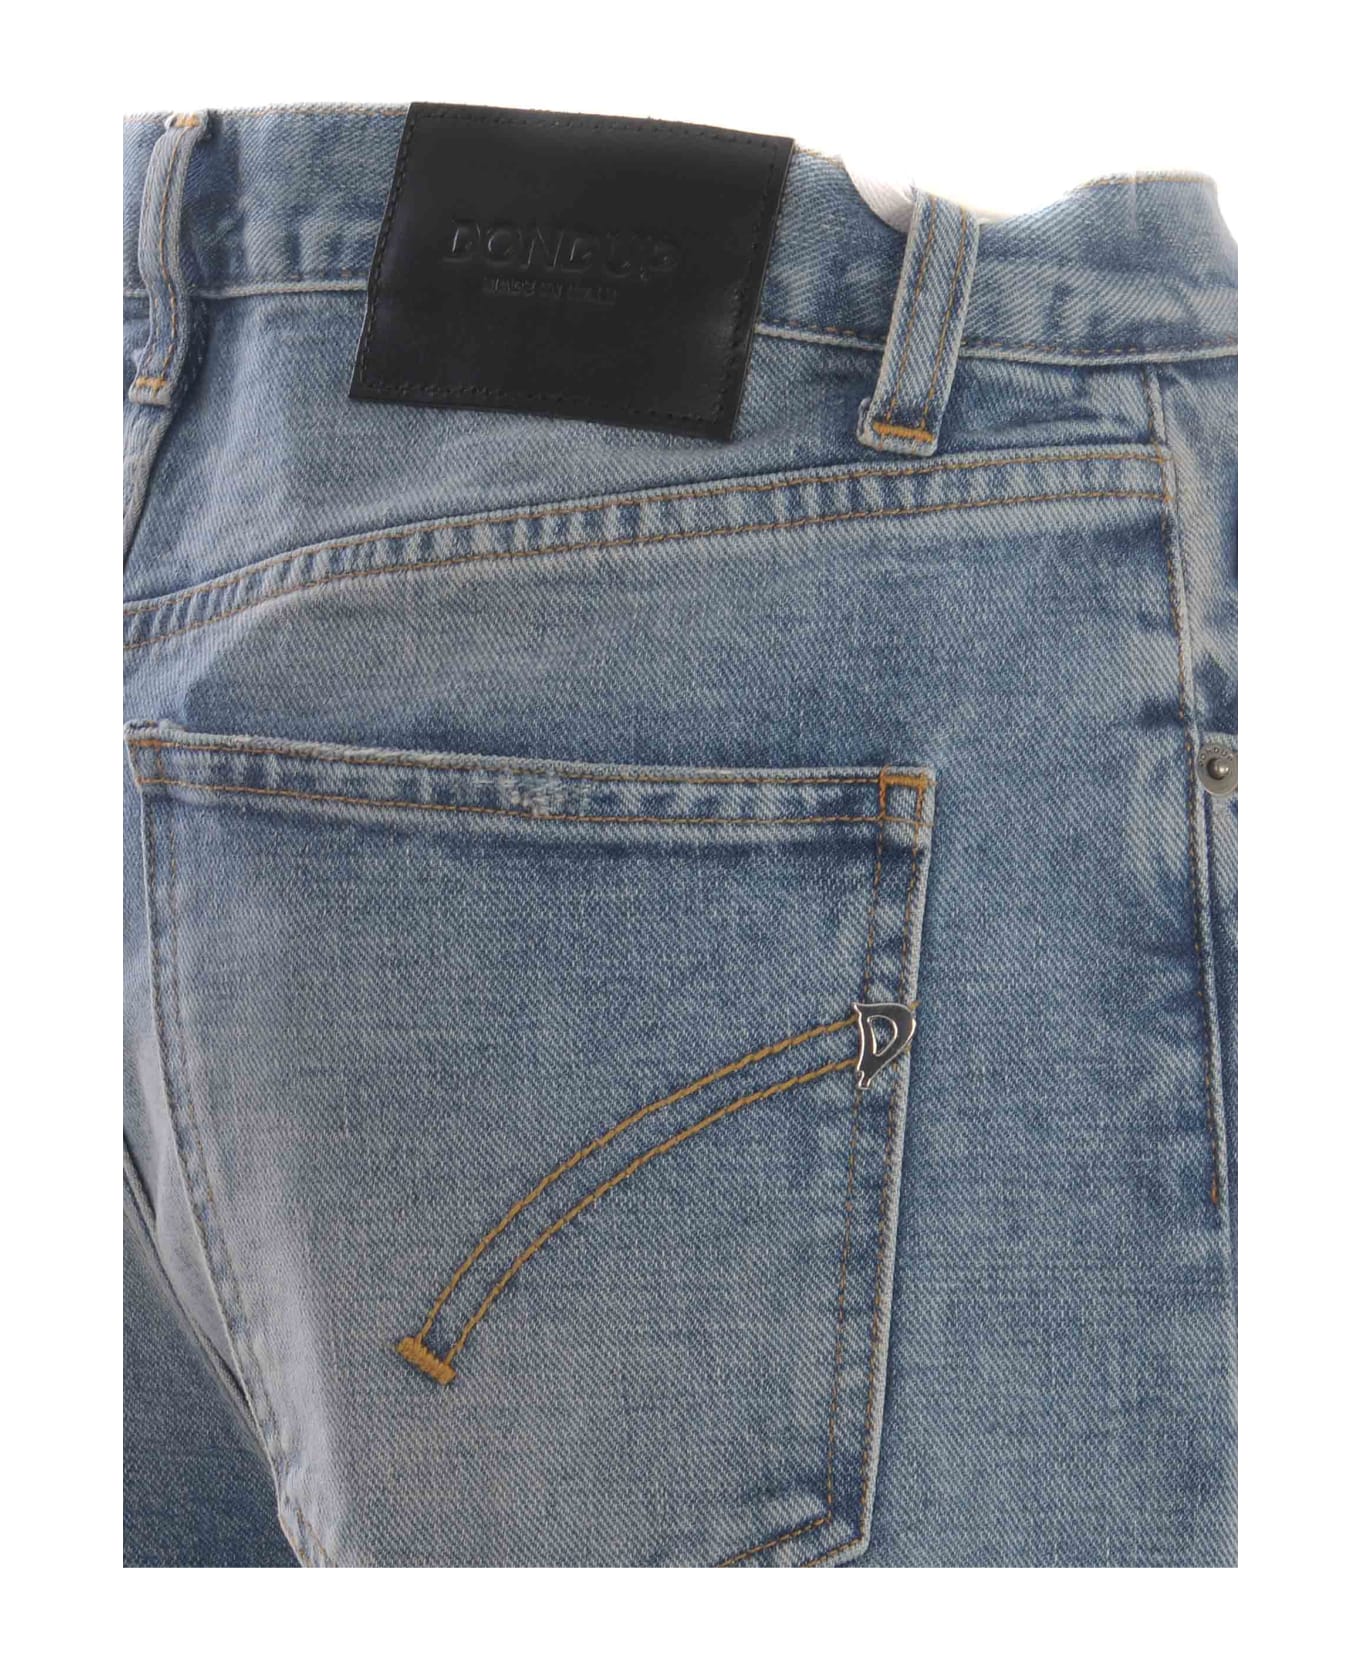 Dondup Jeans Dondup 'francine' Made Of Denim - Denim azzurro chiaro デニム